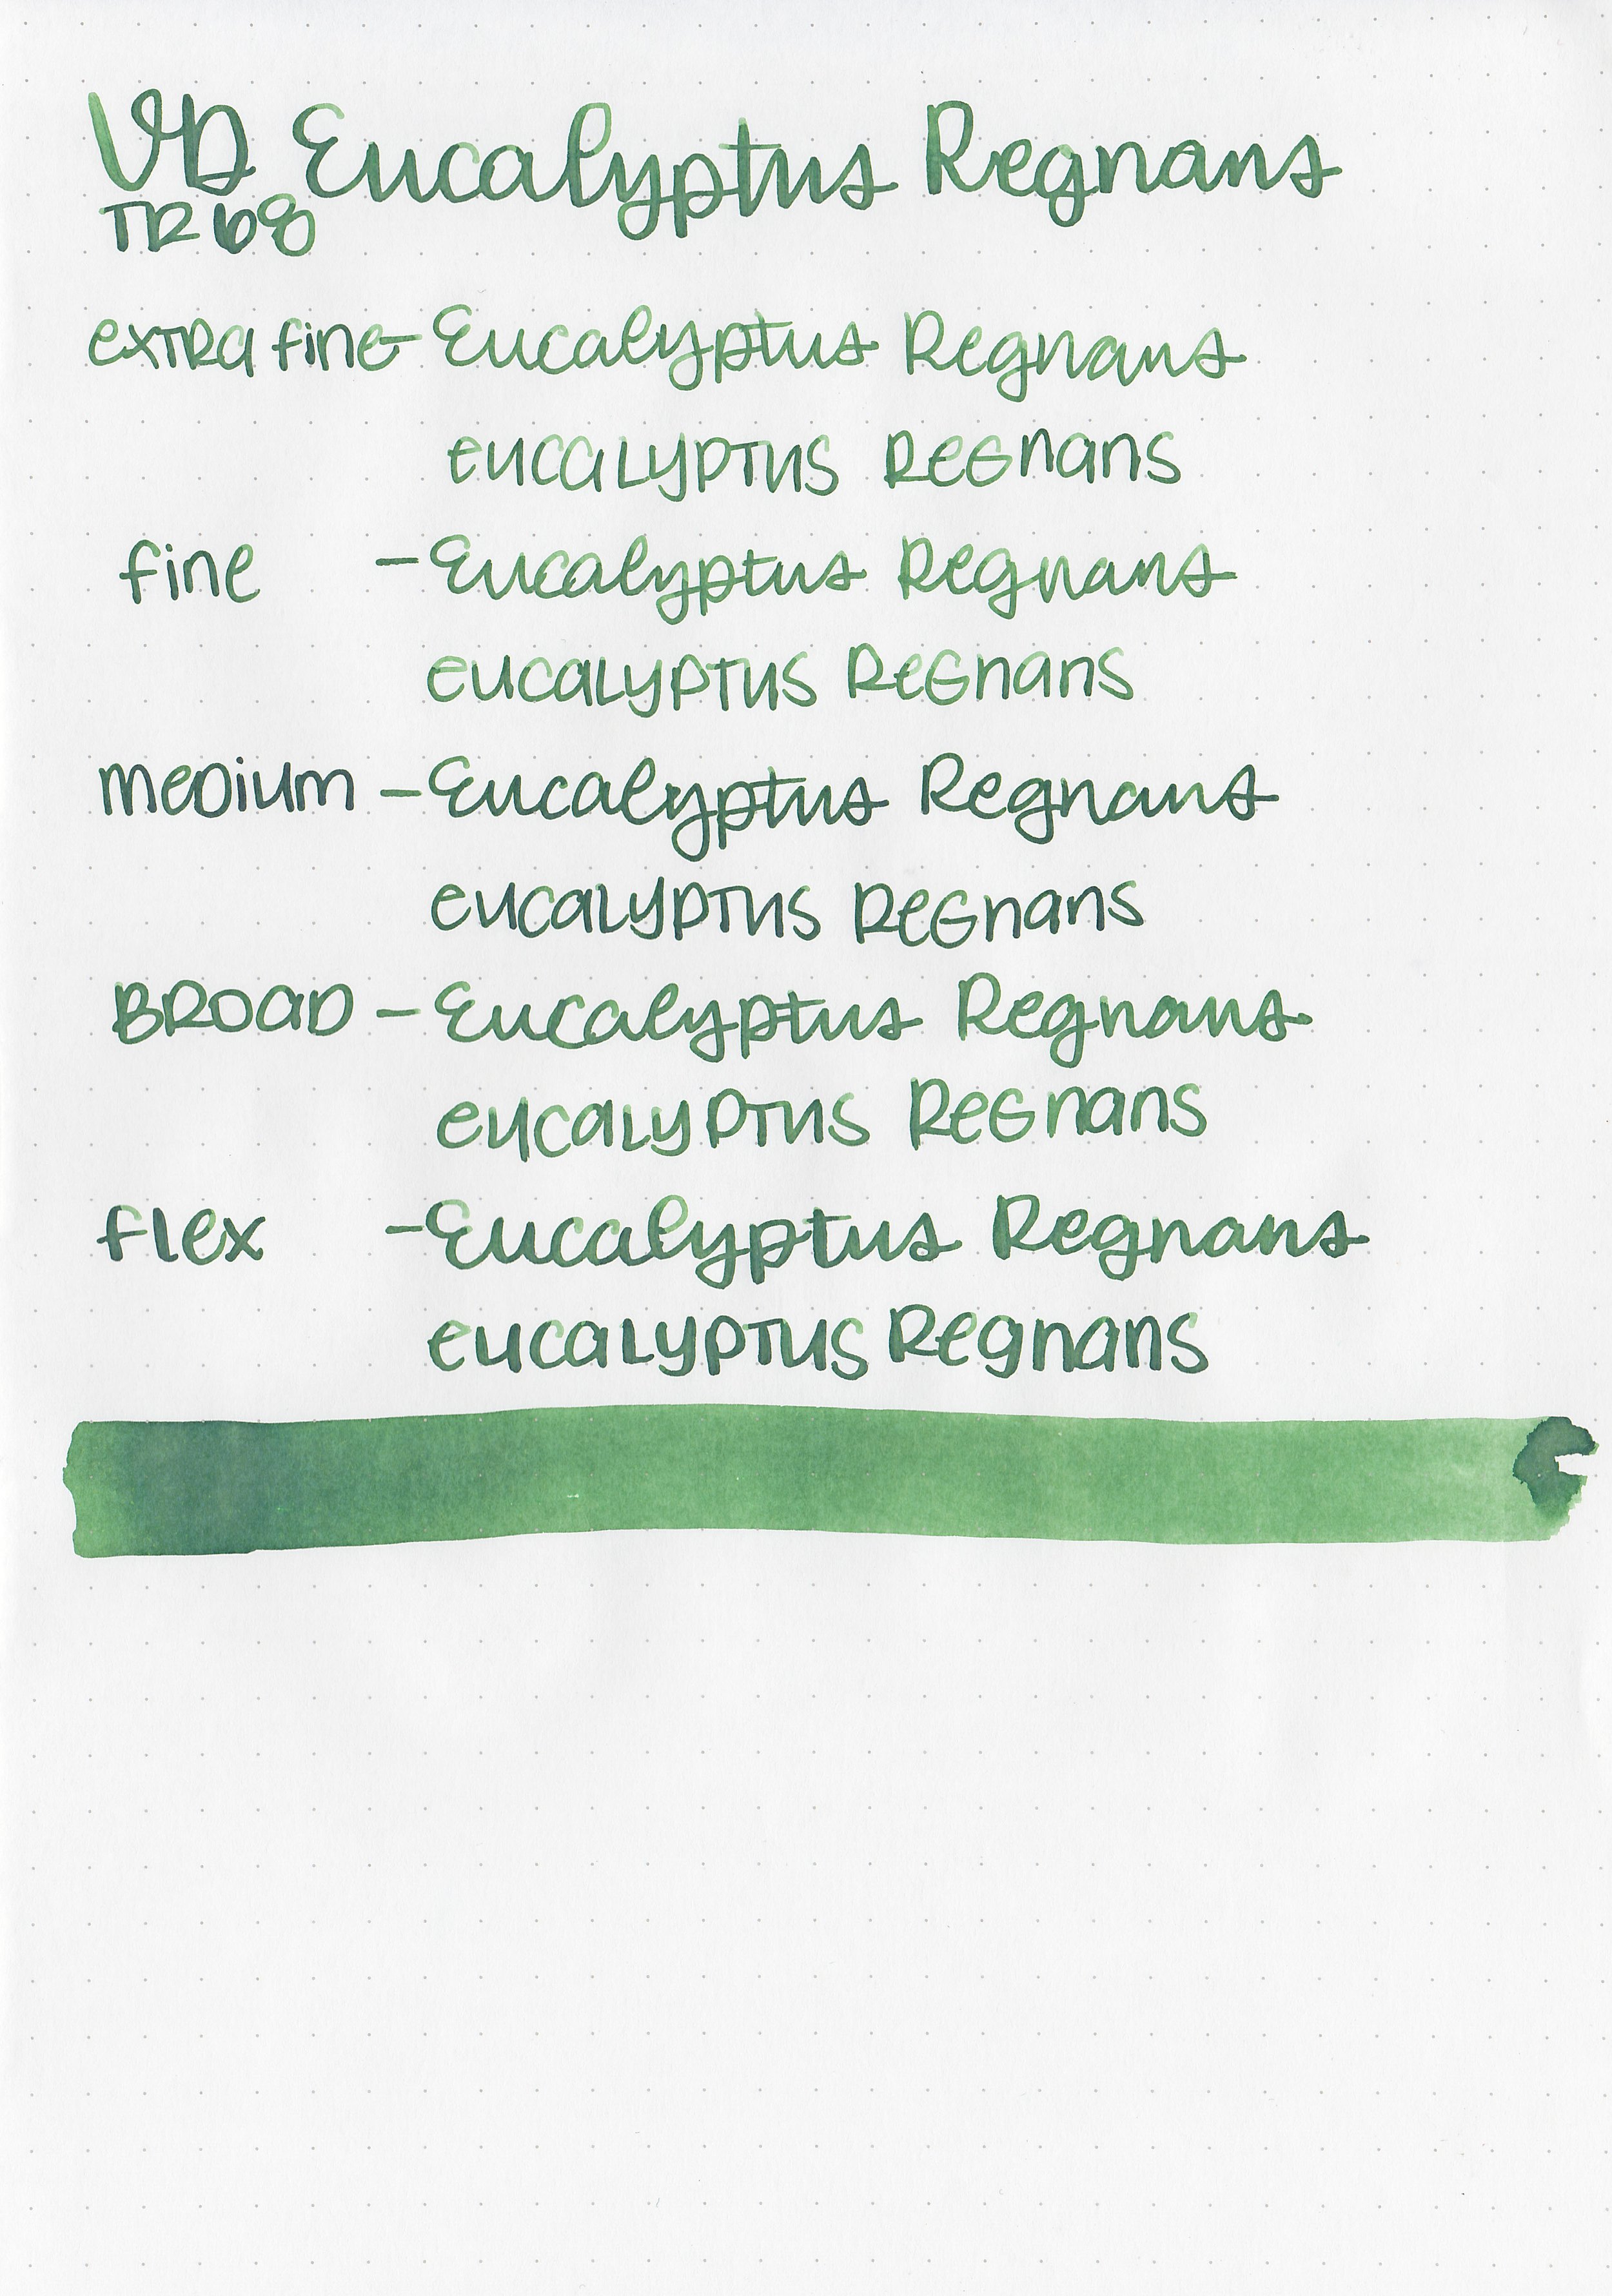 vd-eucalyptus-regnans-6.jpg